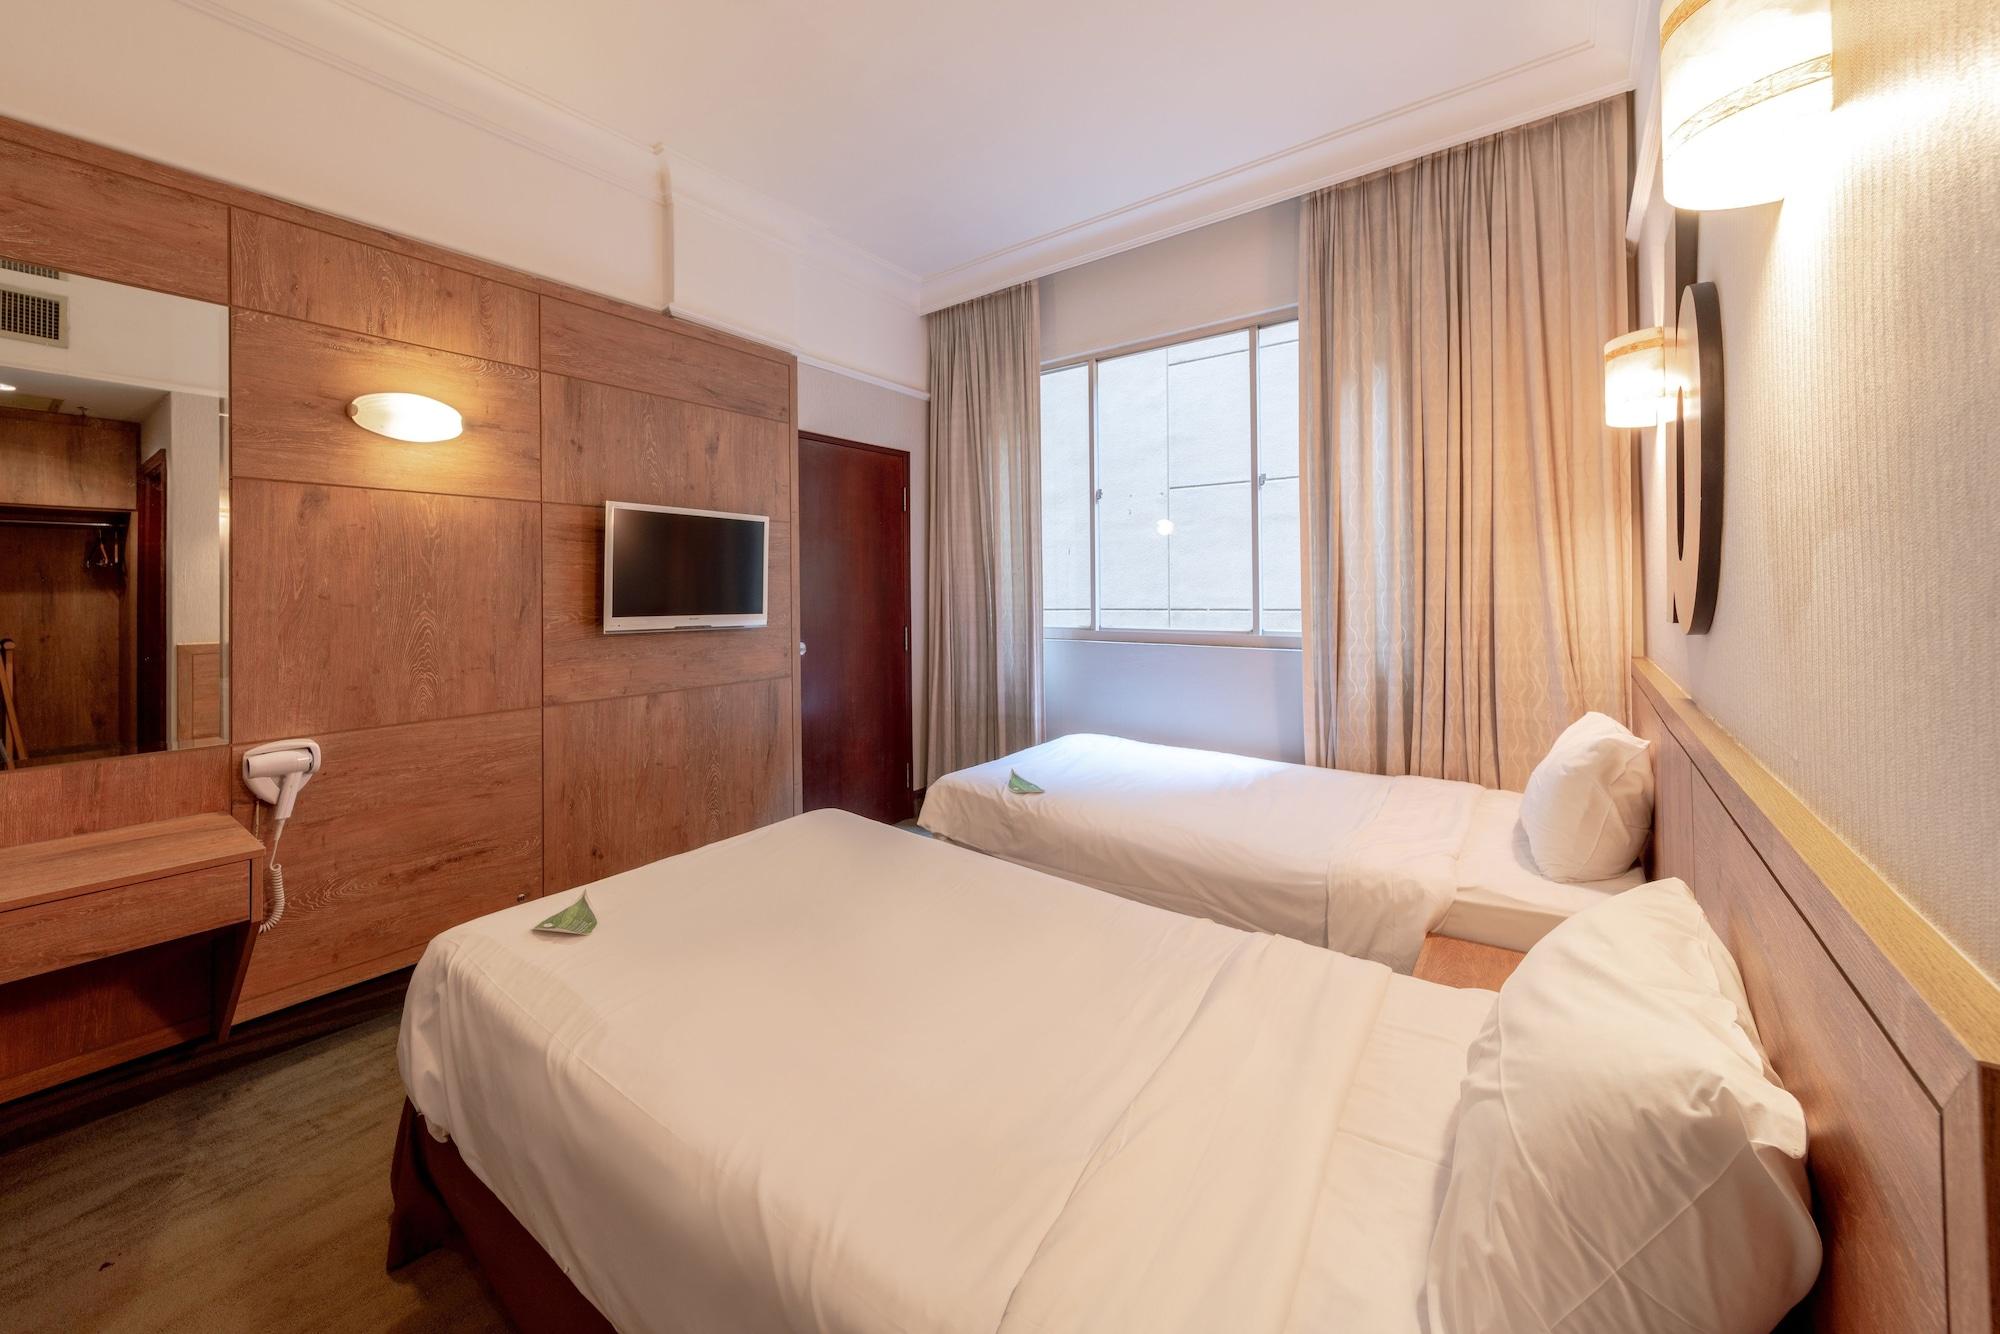 Hotel Bencoolen Singapura Luaran gambar